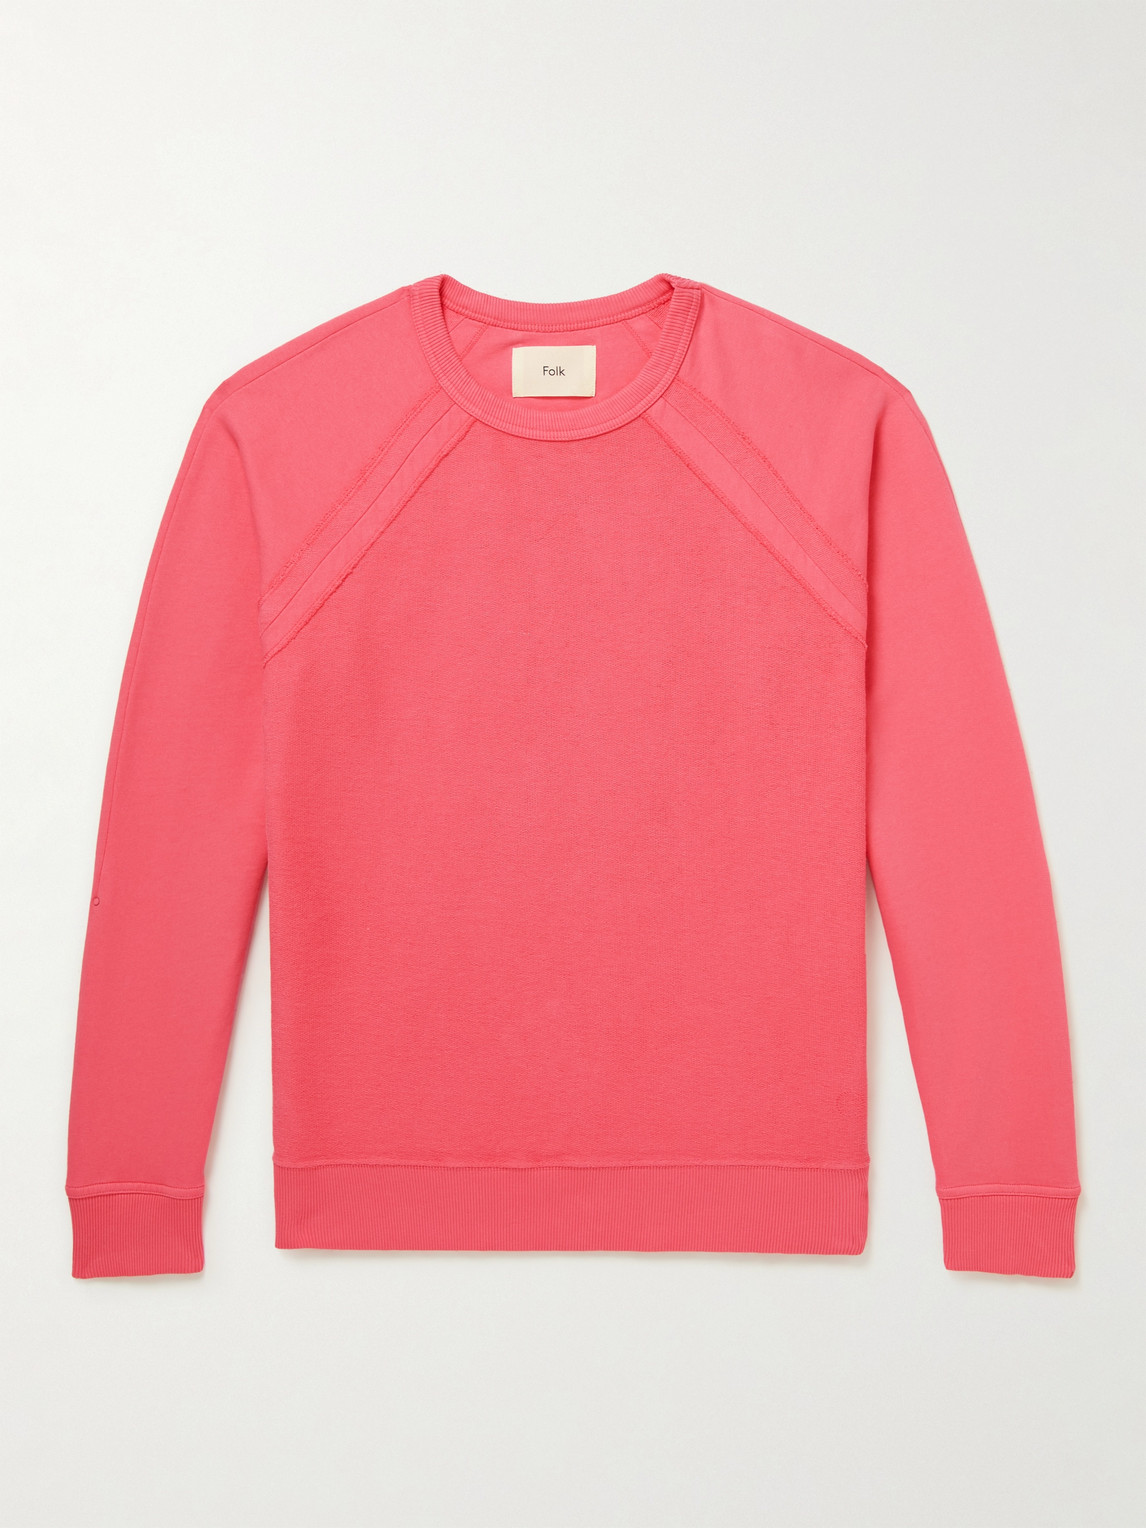 Folk Rework Rivet Cotton-jersey And Terry Sweatshirt In Pink